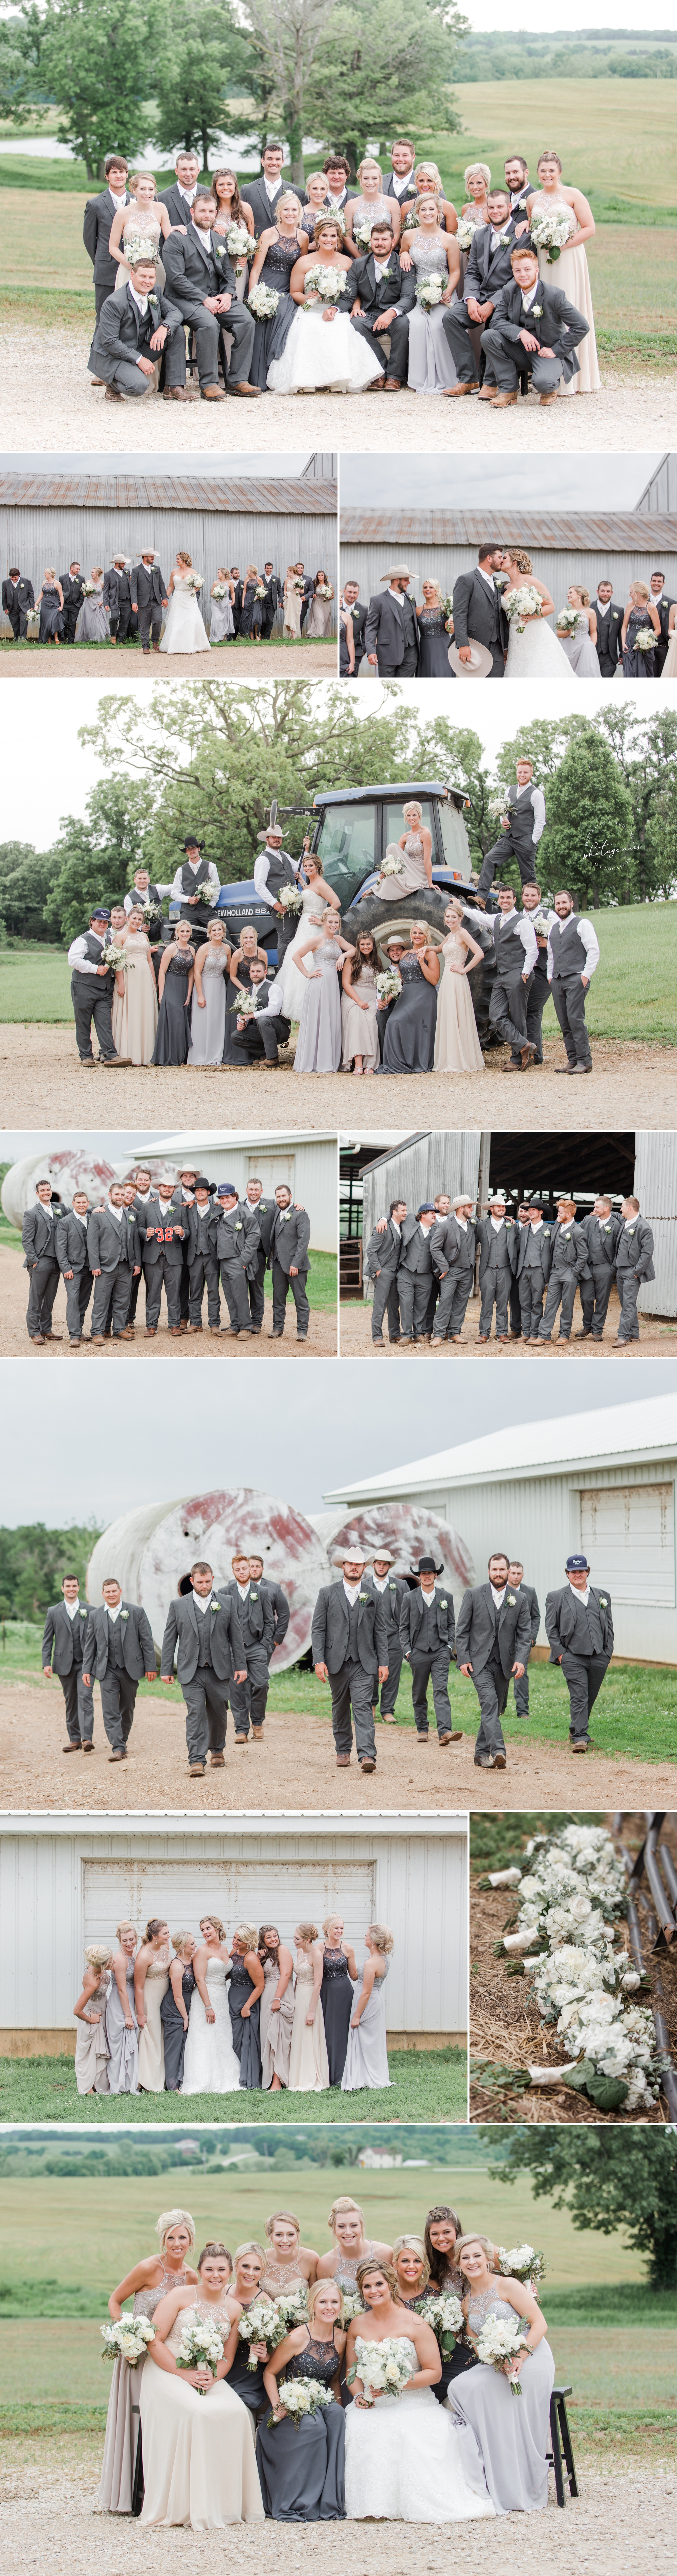 wedding_photographer_photography_new_haven_mo_missouri_washington_wedding_large_wedding_party_cowboy_hats_farm_family_ideas_colors 6